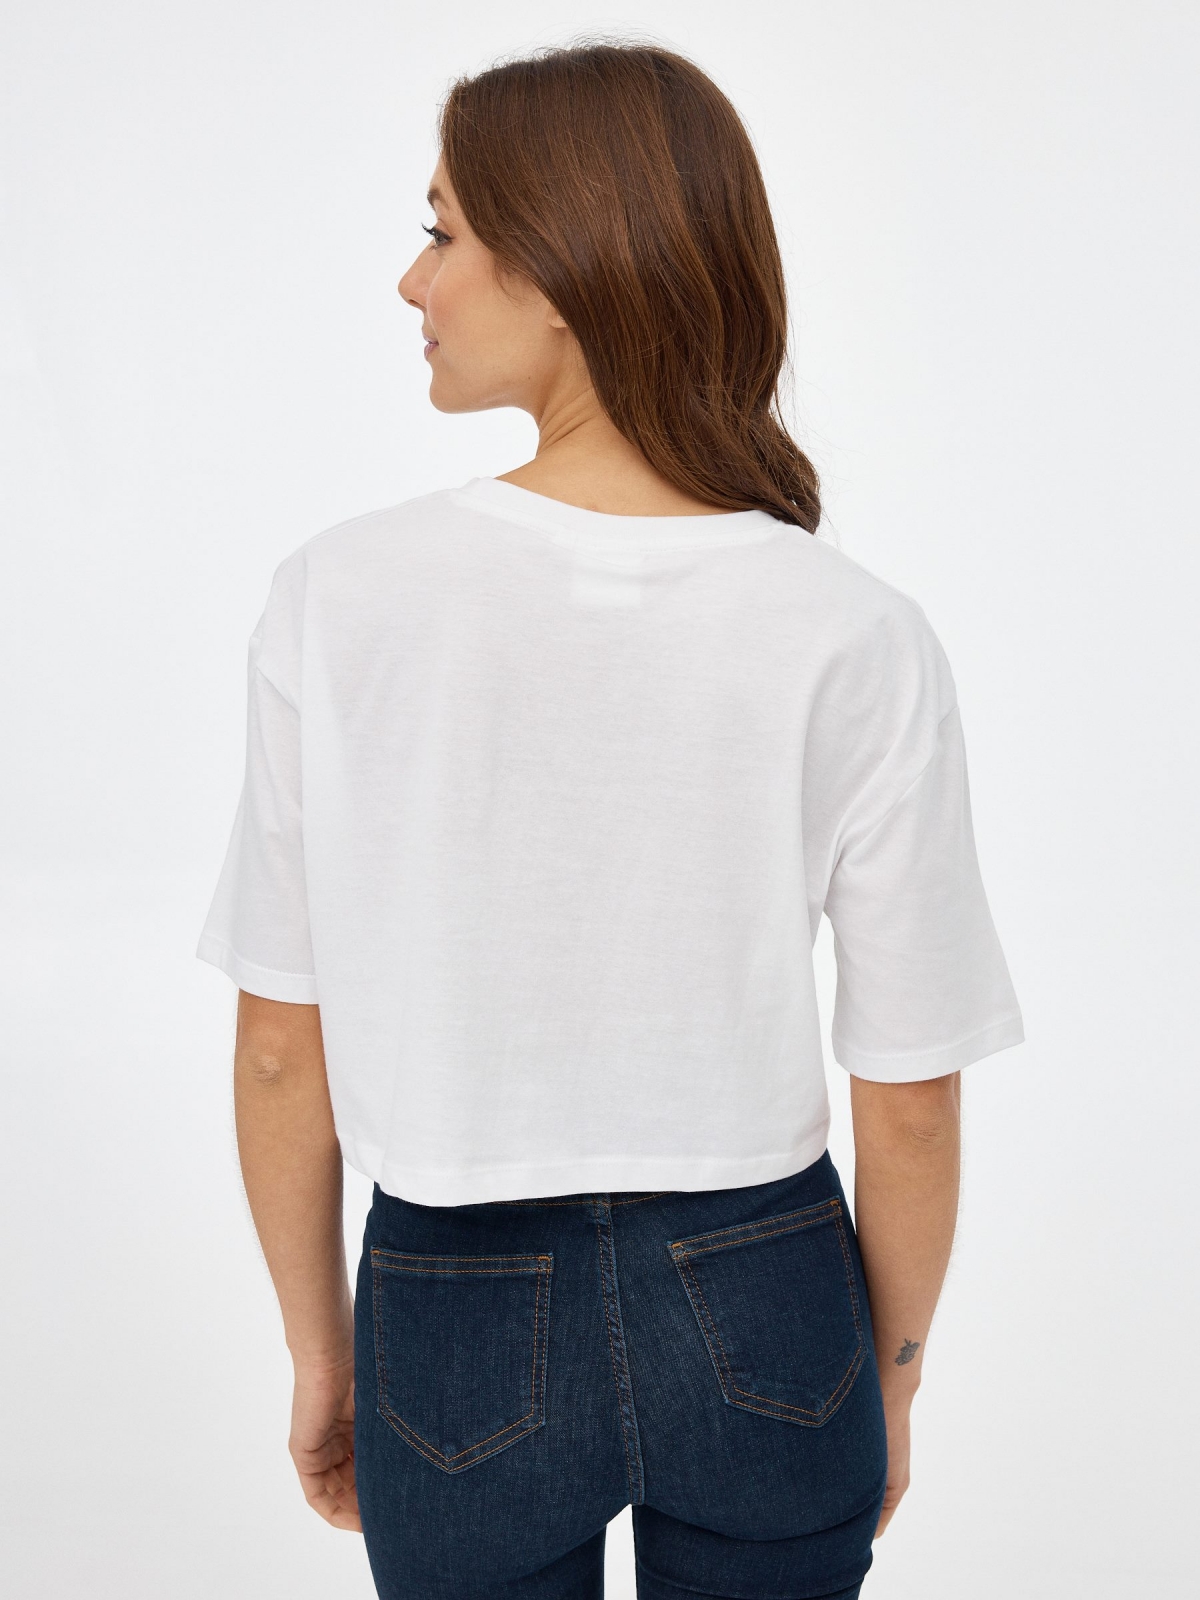 Ariel crop T-shirt white middle back view